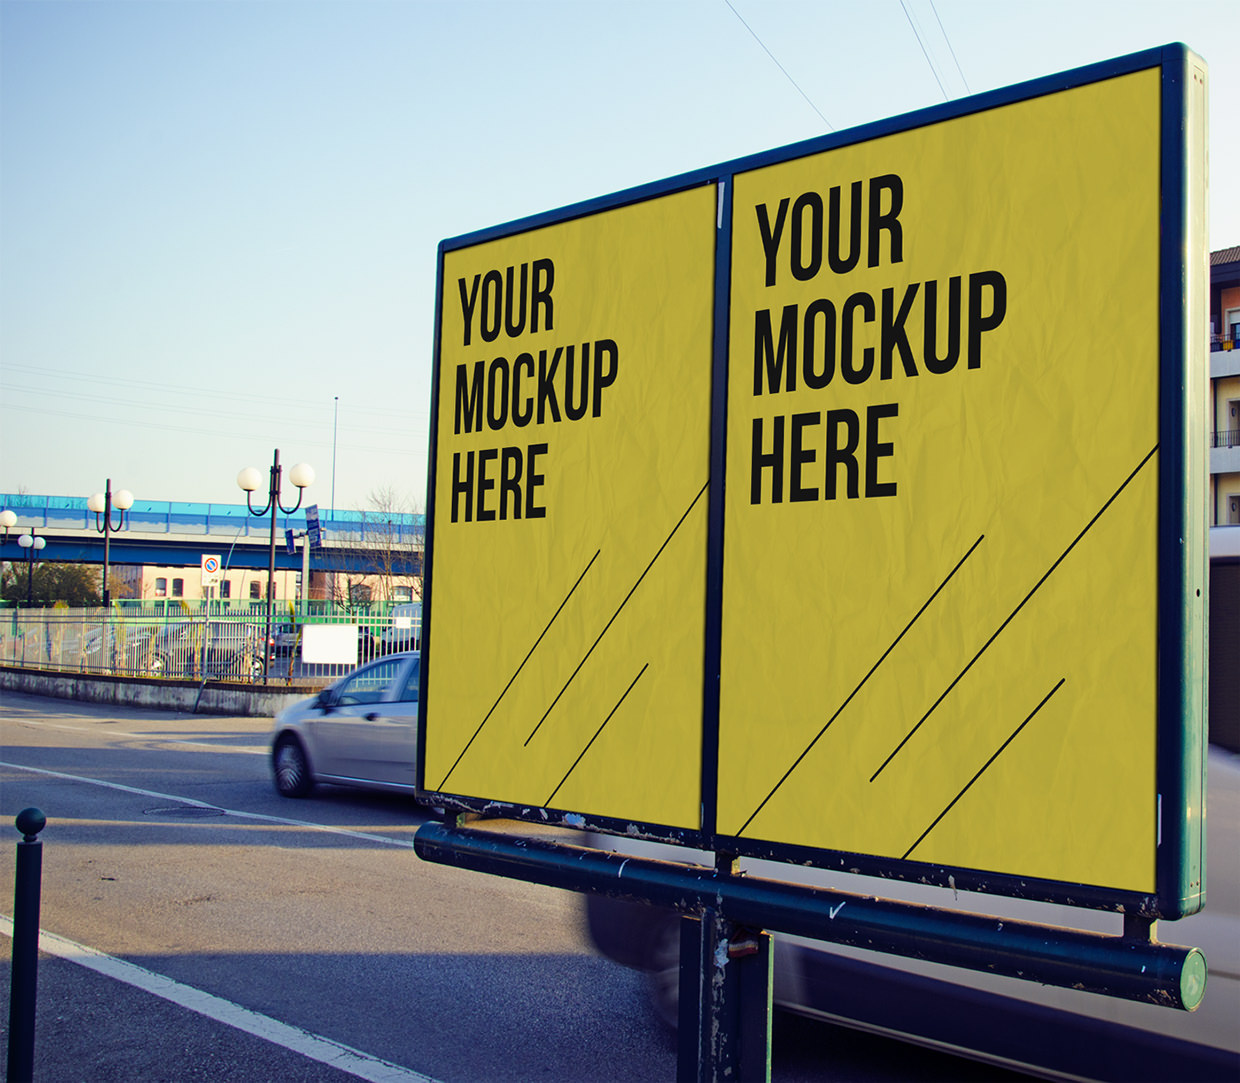 25+ Outdoor Advertising Mockup Designs | Designs | Design ...
